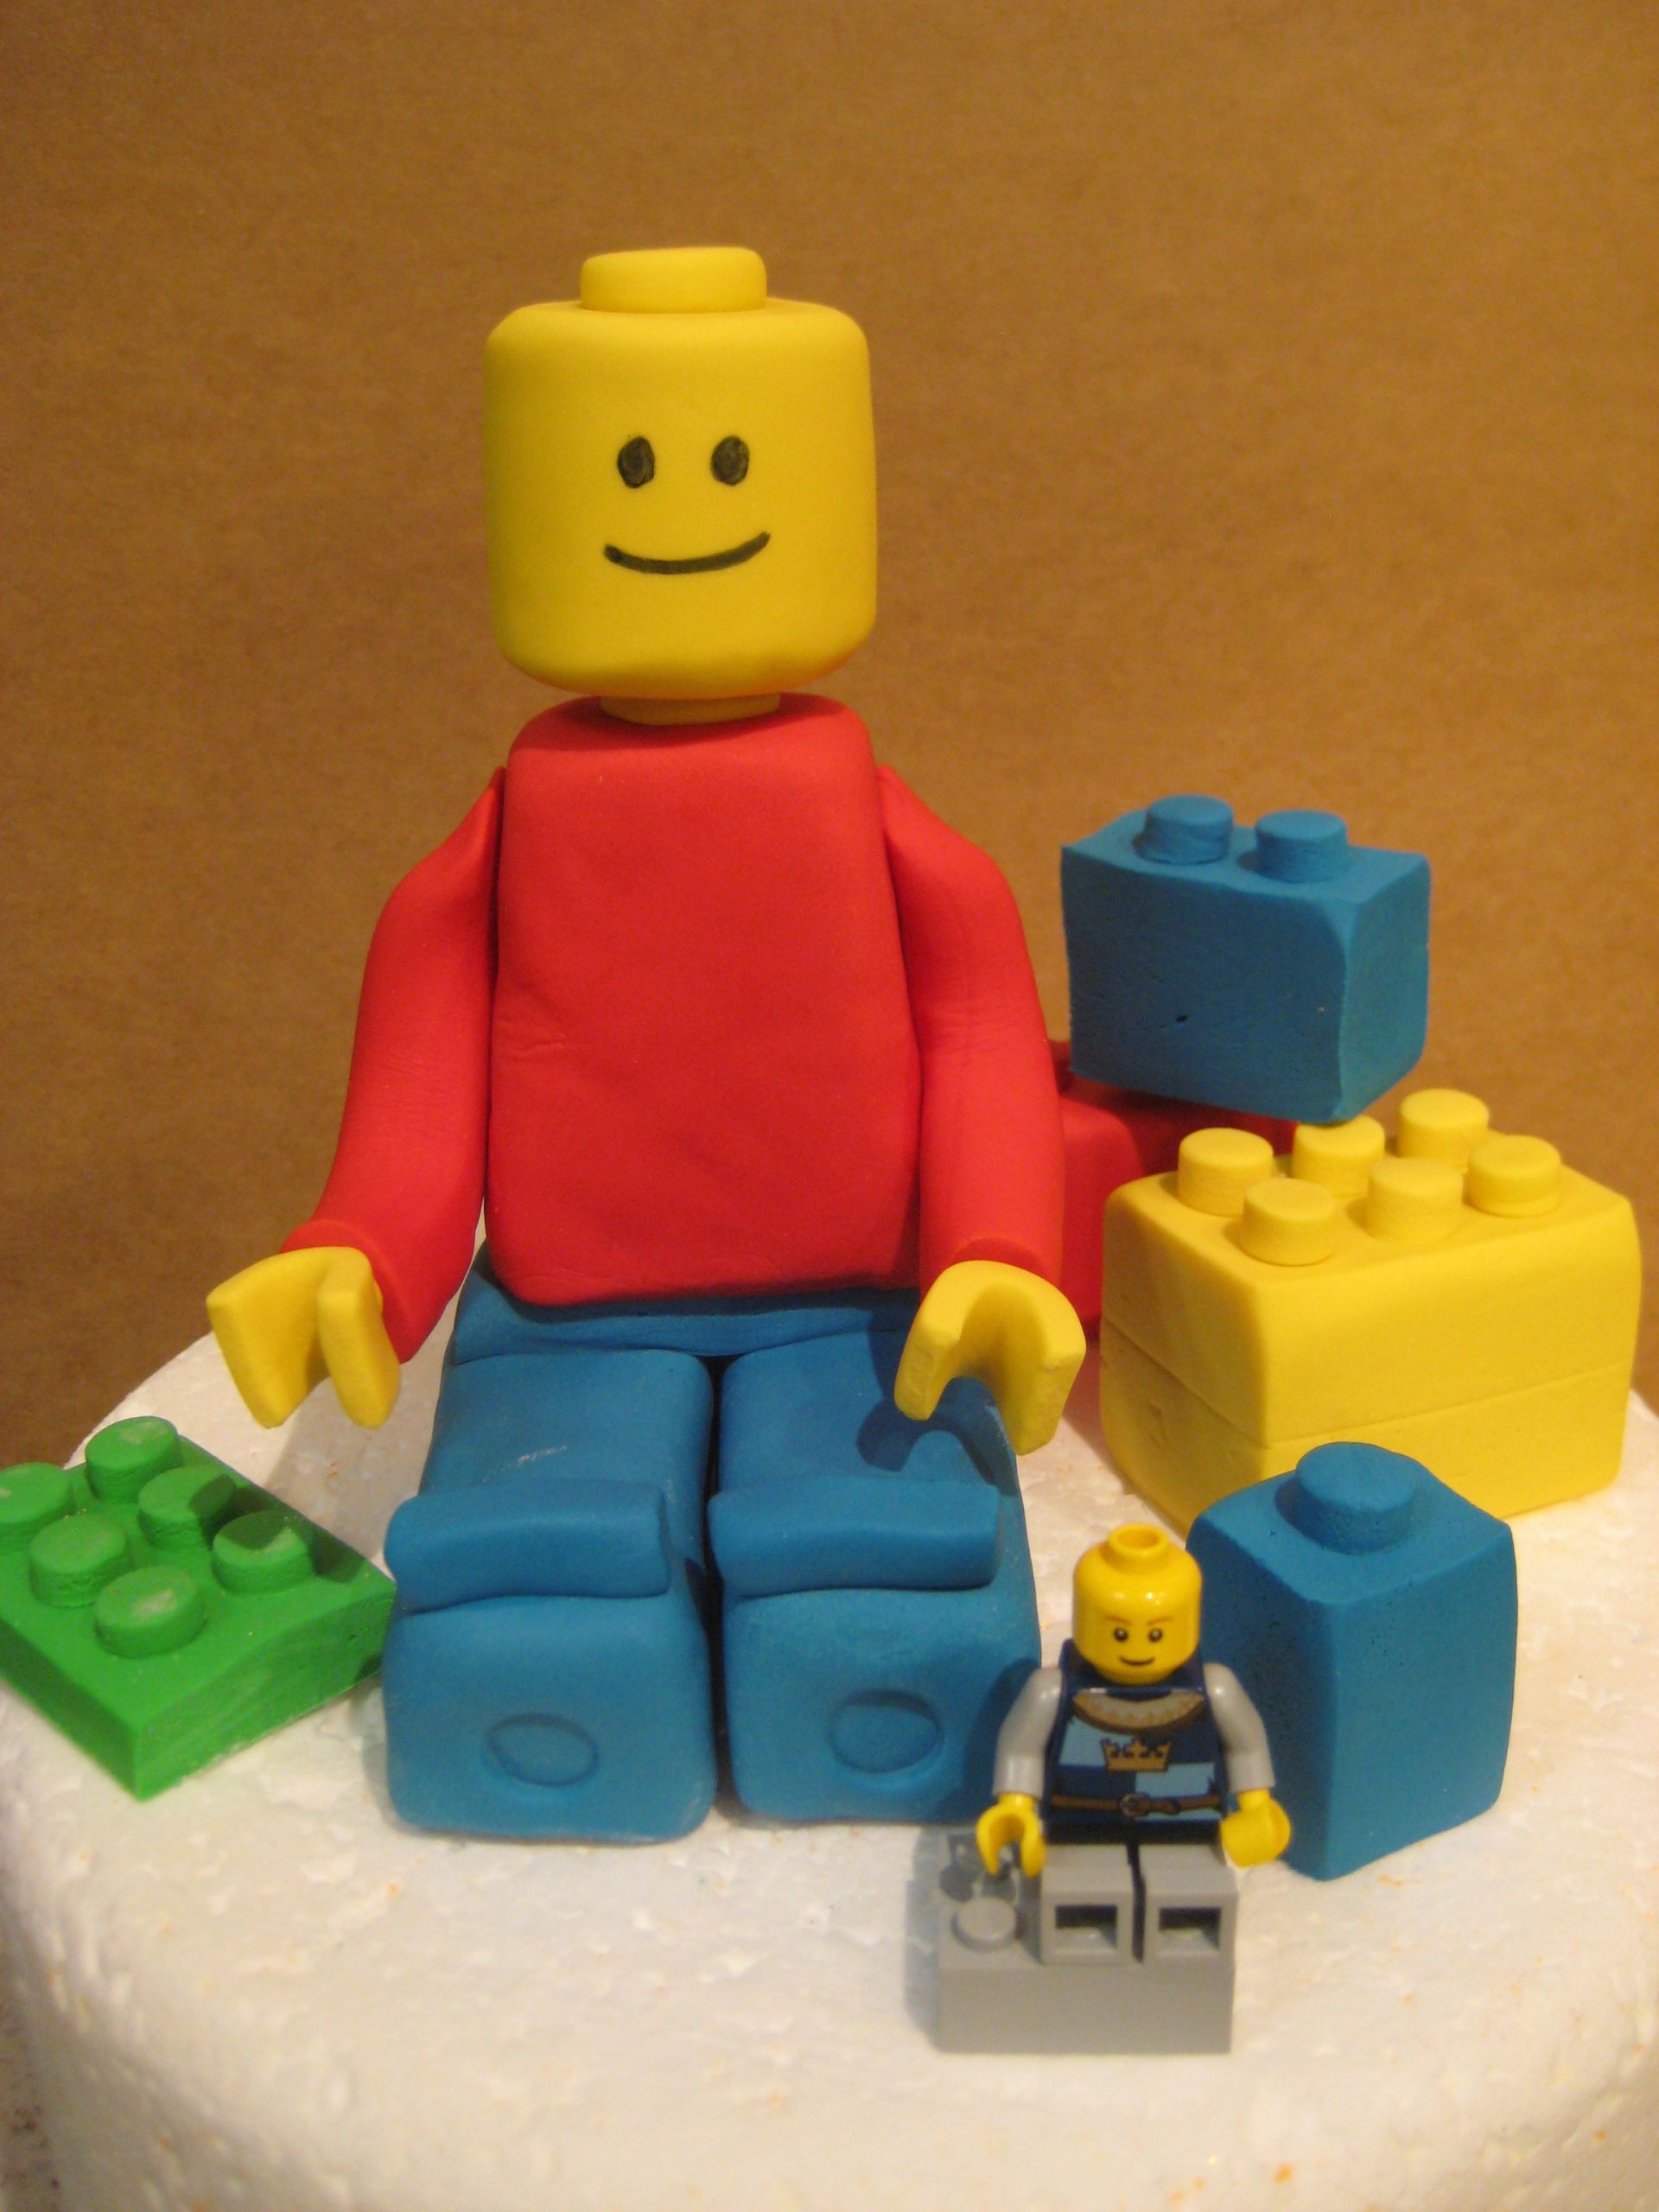 Lego Birthday Cake Topper
 Giant Lego Man Cake Topper